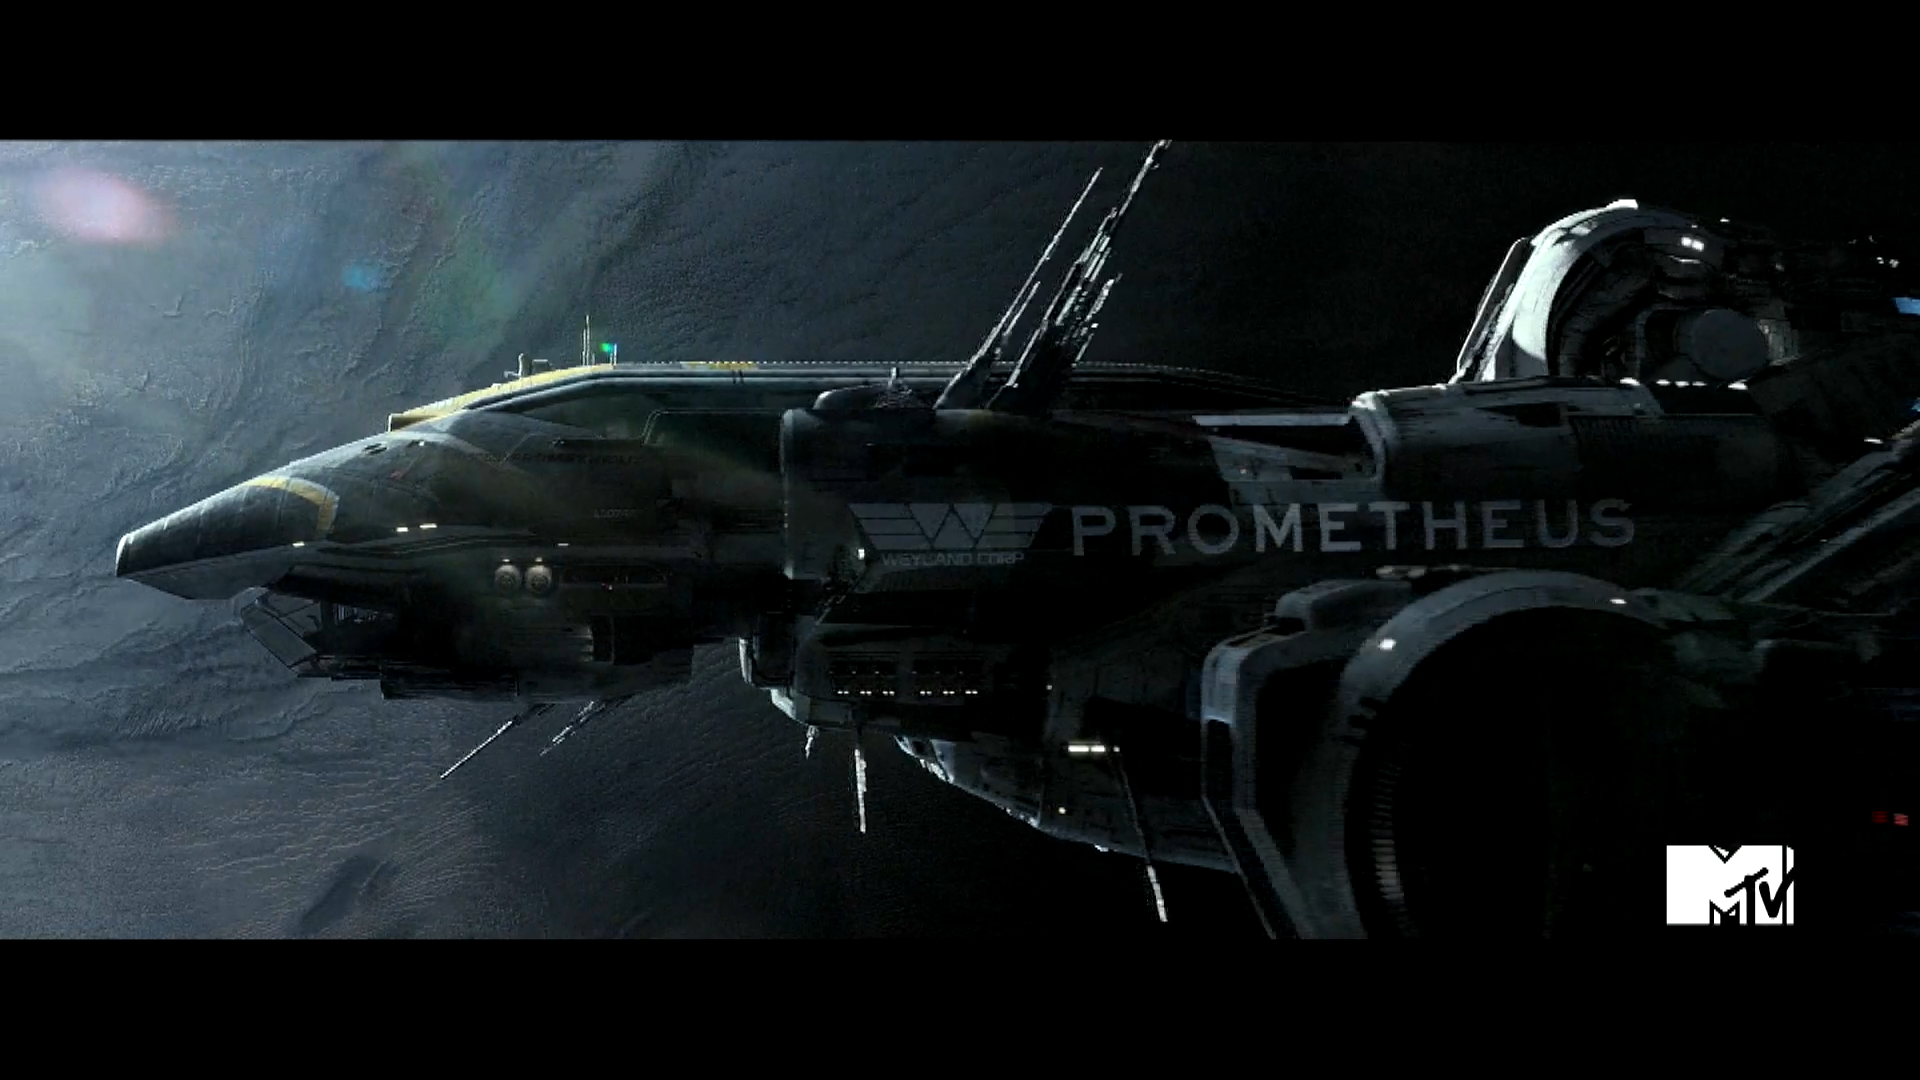 Prometheus_01.png